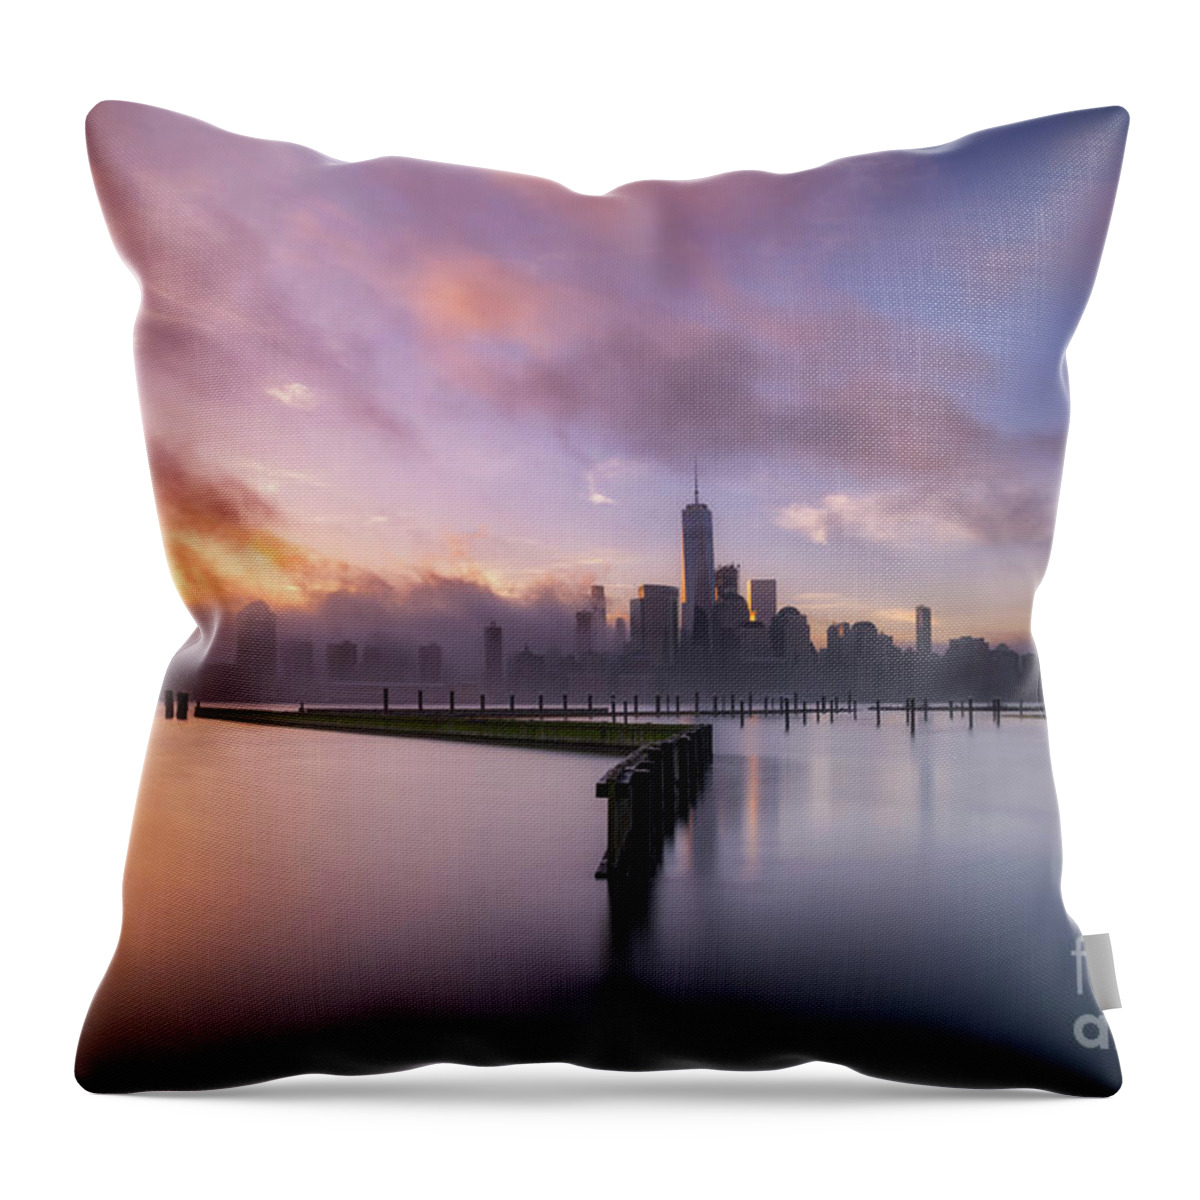 Manhattan Throw Pillow featuring the photograph Manhattan On Fire by Michael Ver Sprill